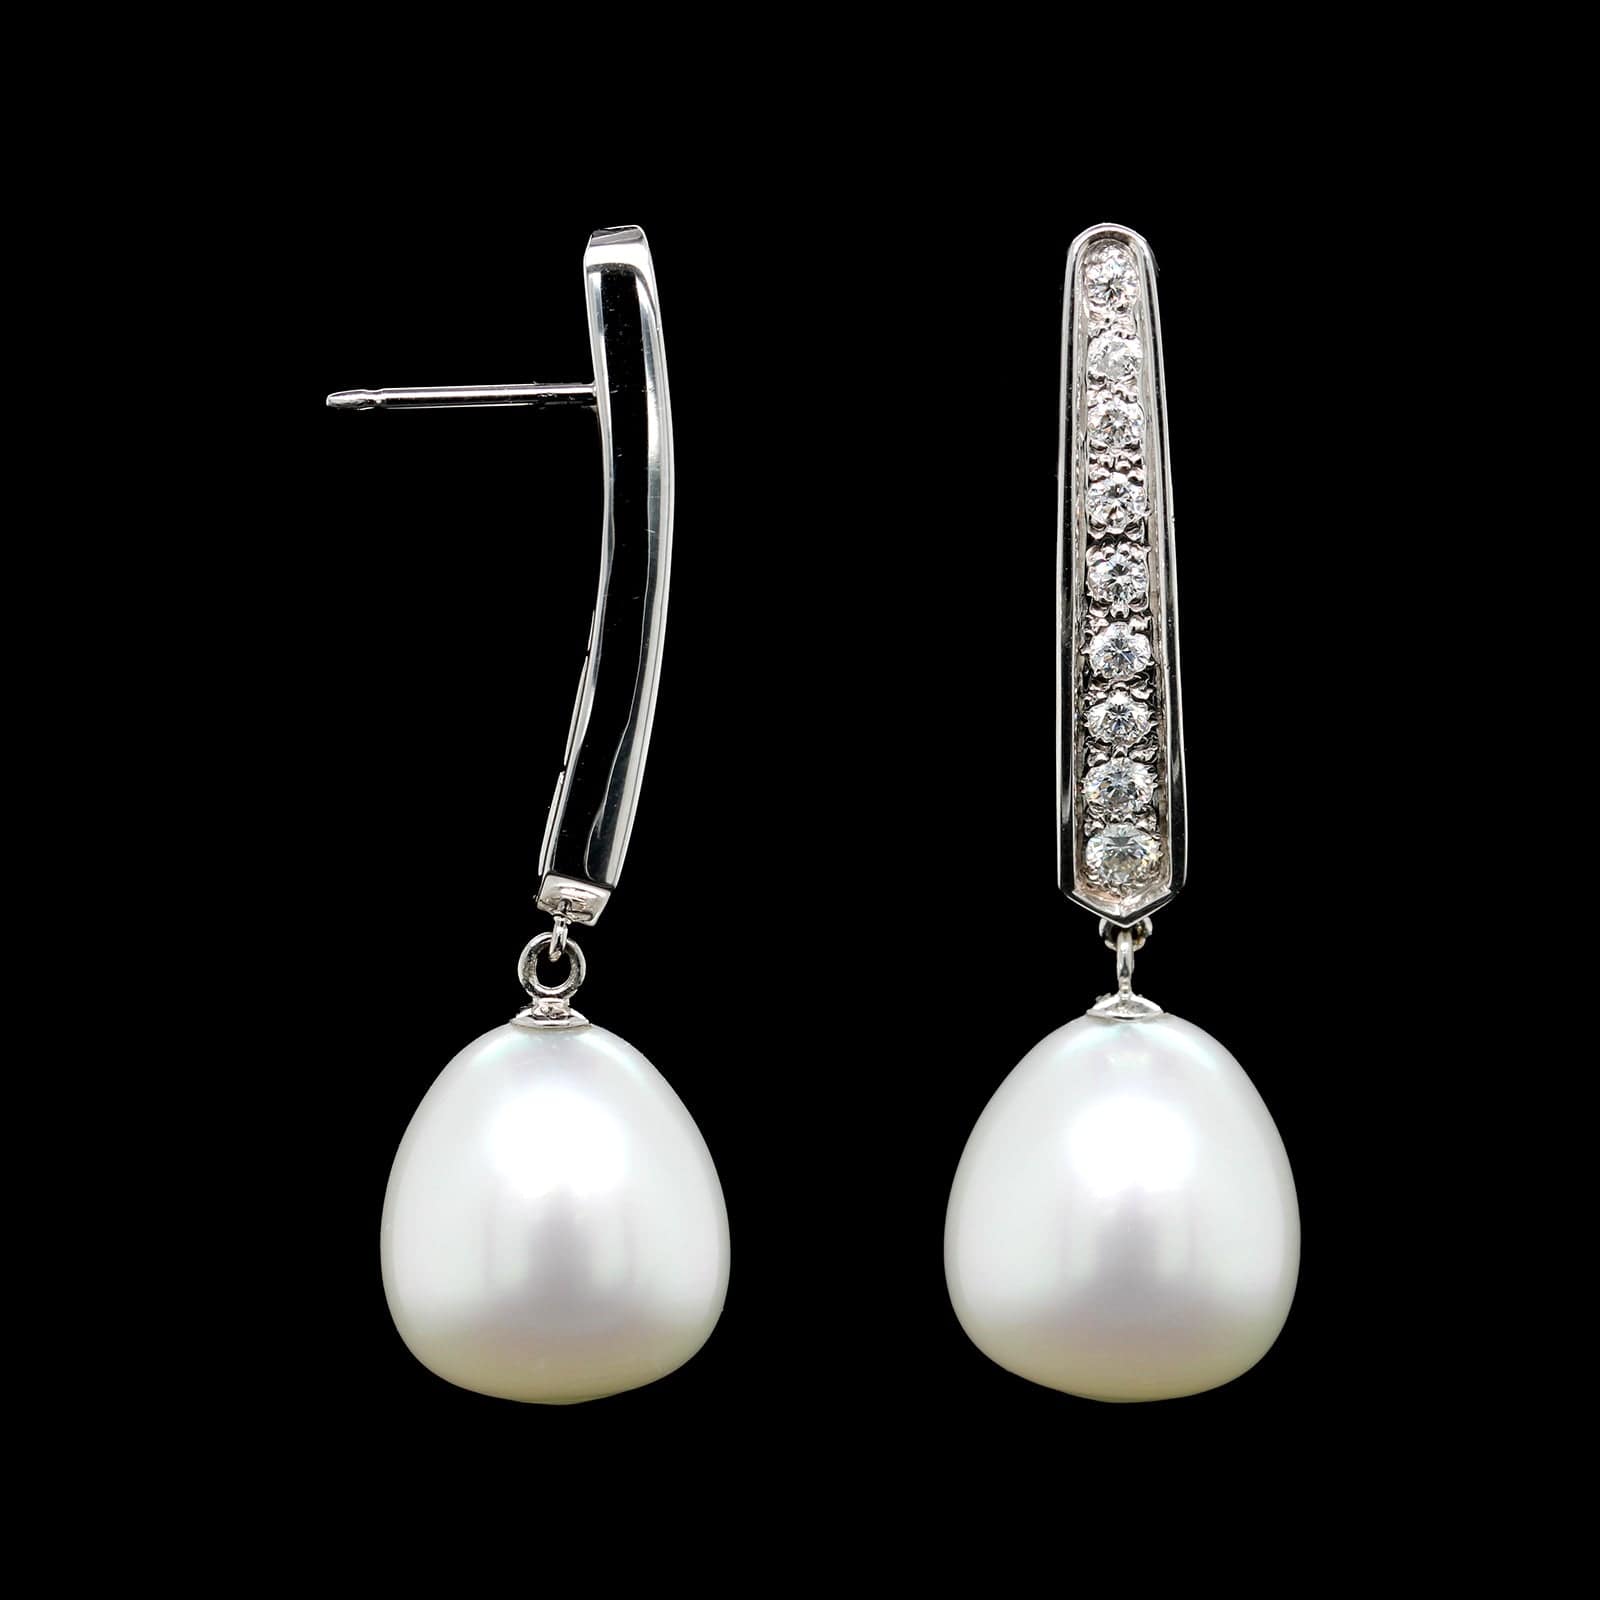 Marlene Stowe 18K White Gold Estate South Sea Cultured Pearl and Diamond Earrings